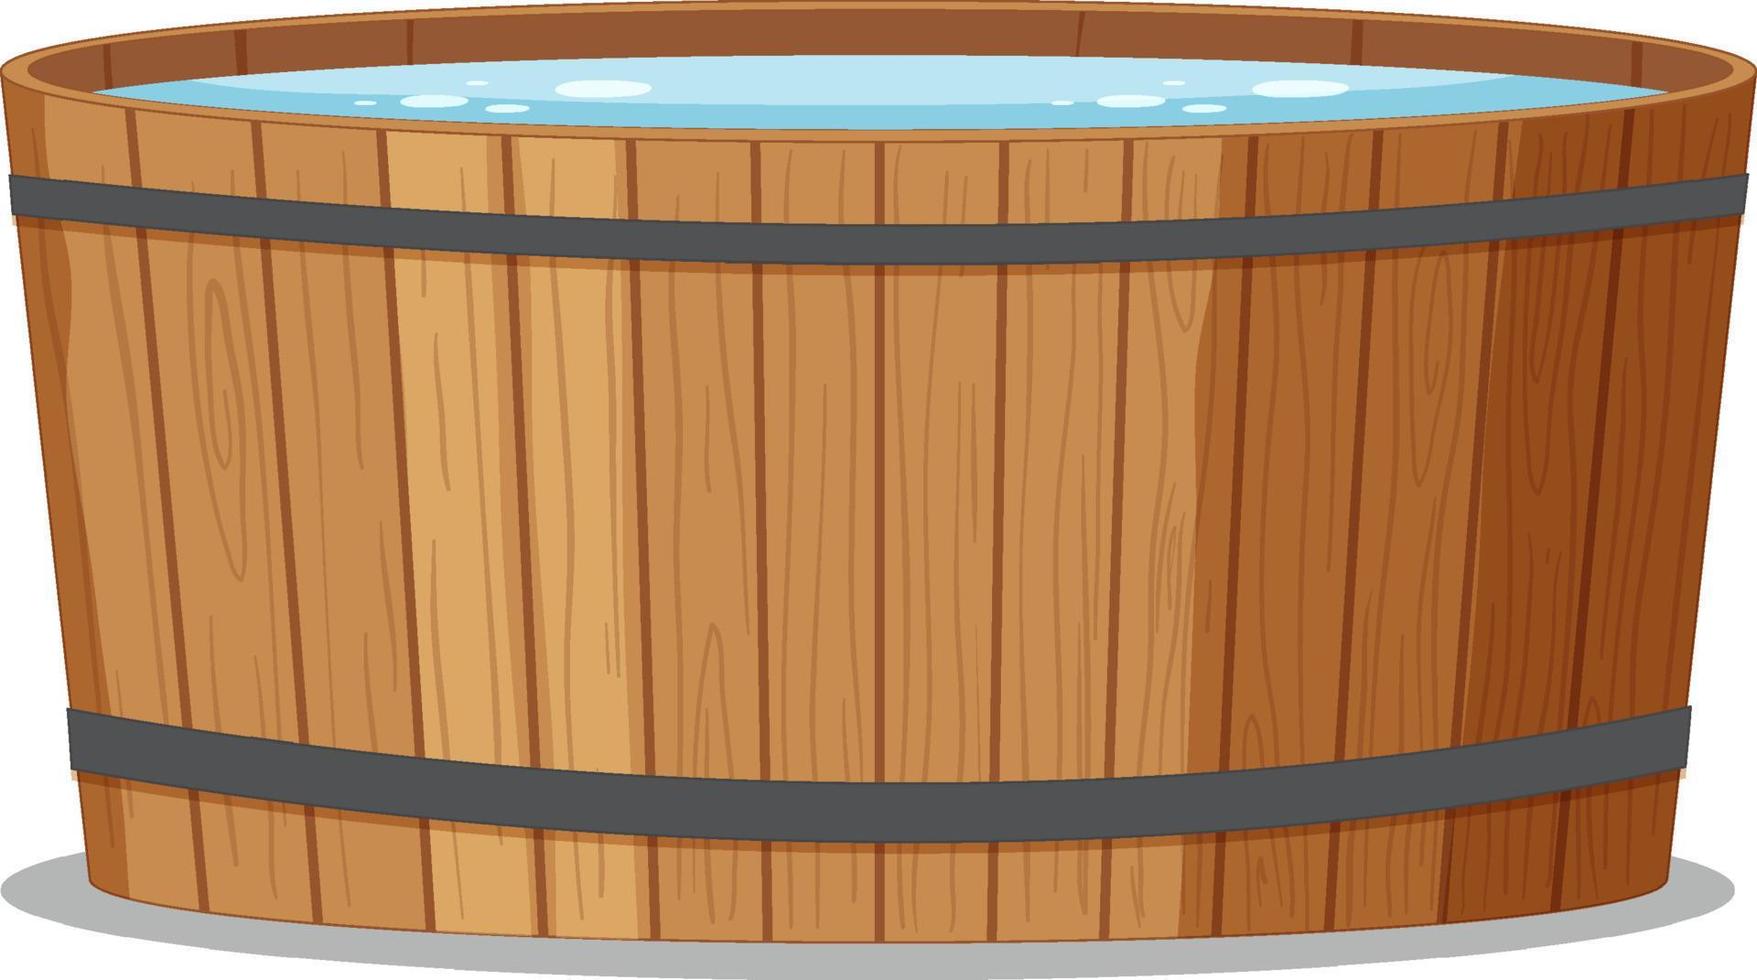 Wooden hot tub spa vector